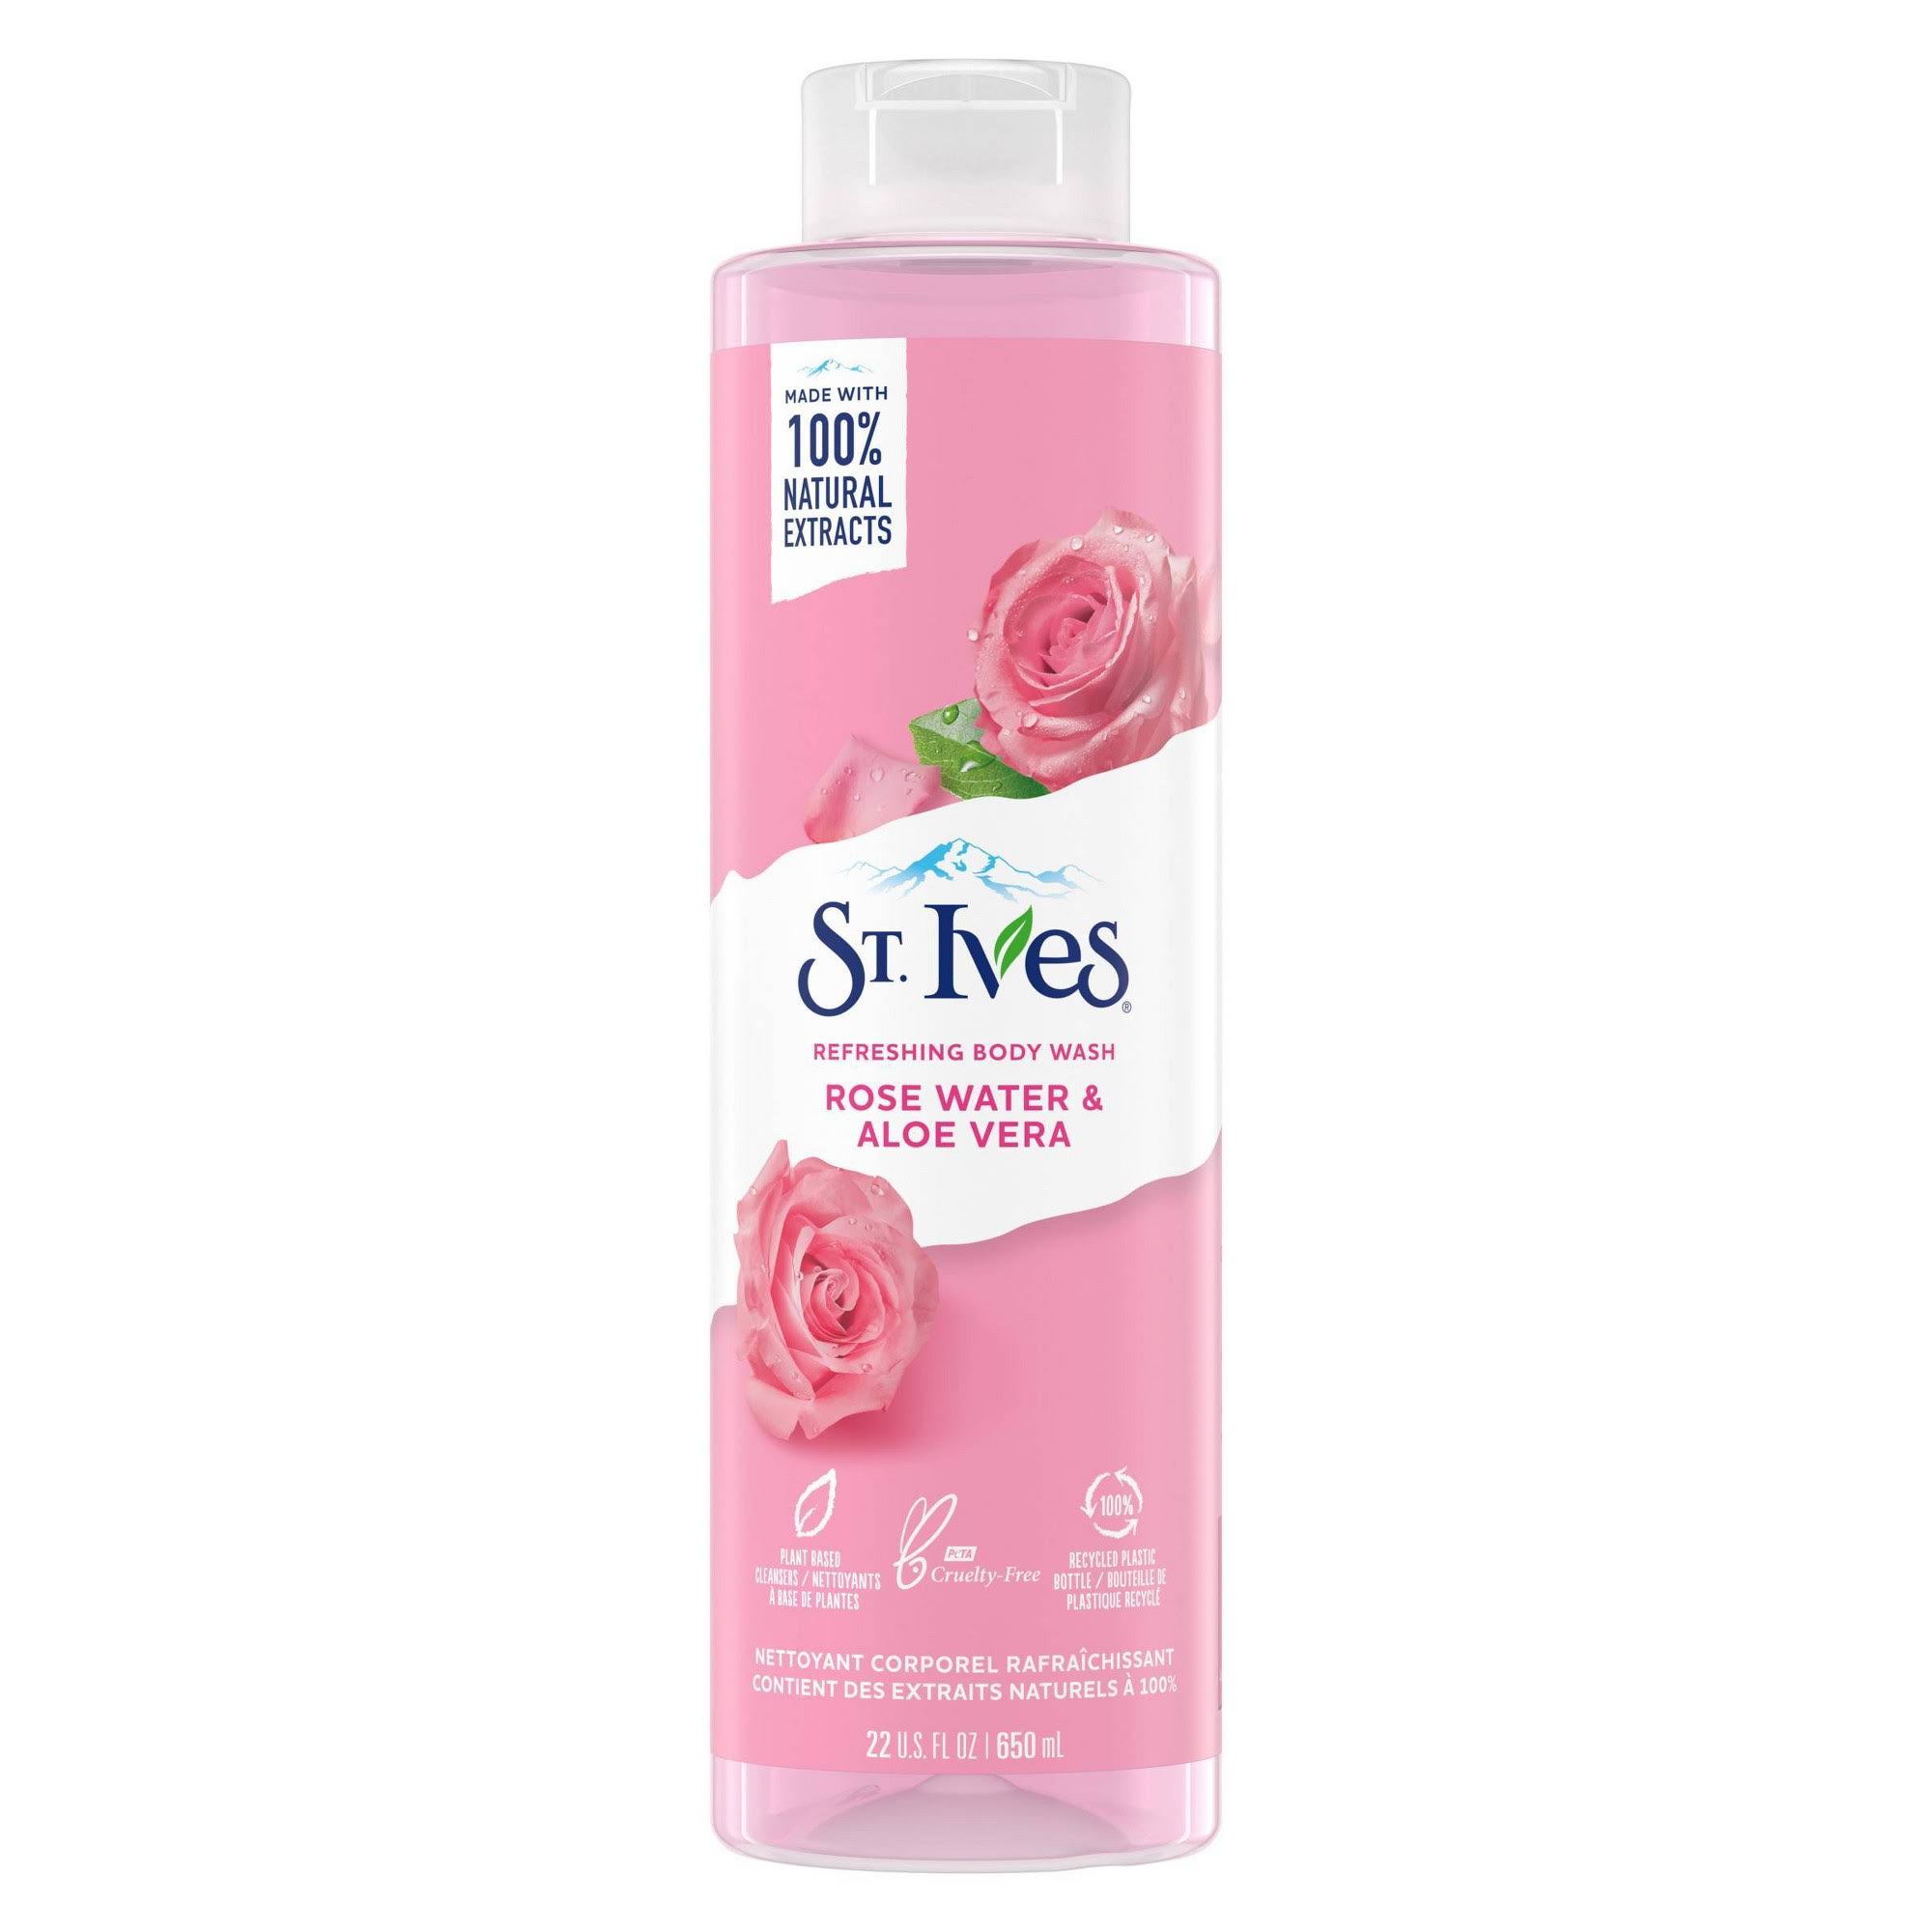 St Ives Body Wash, Rose Water & Aloe Vera, Refreshing - 22 fl oz